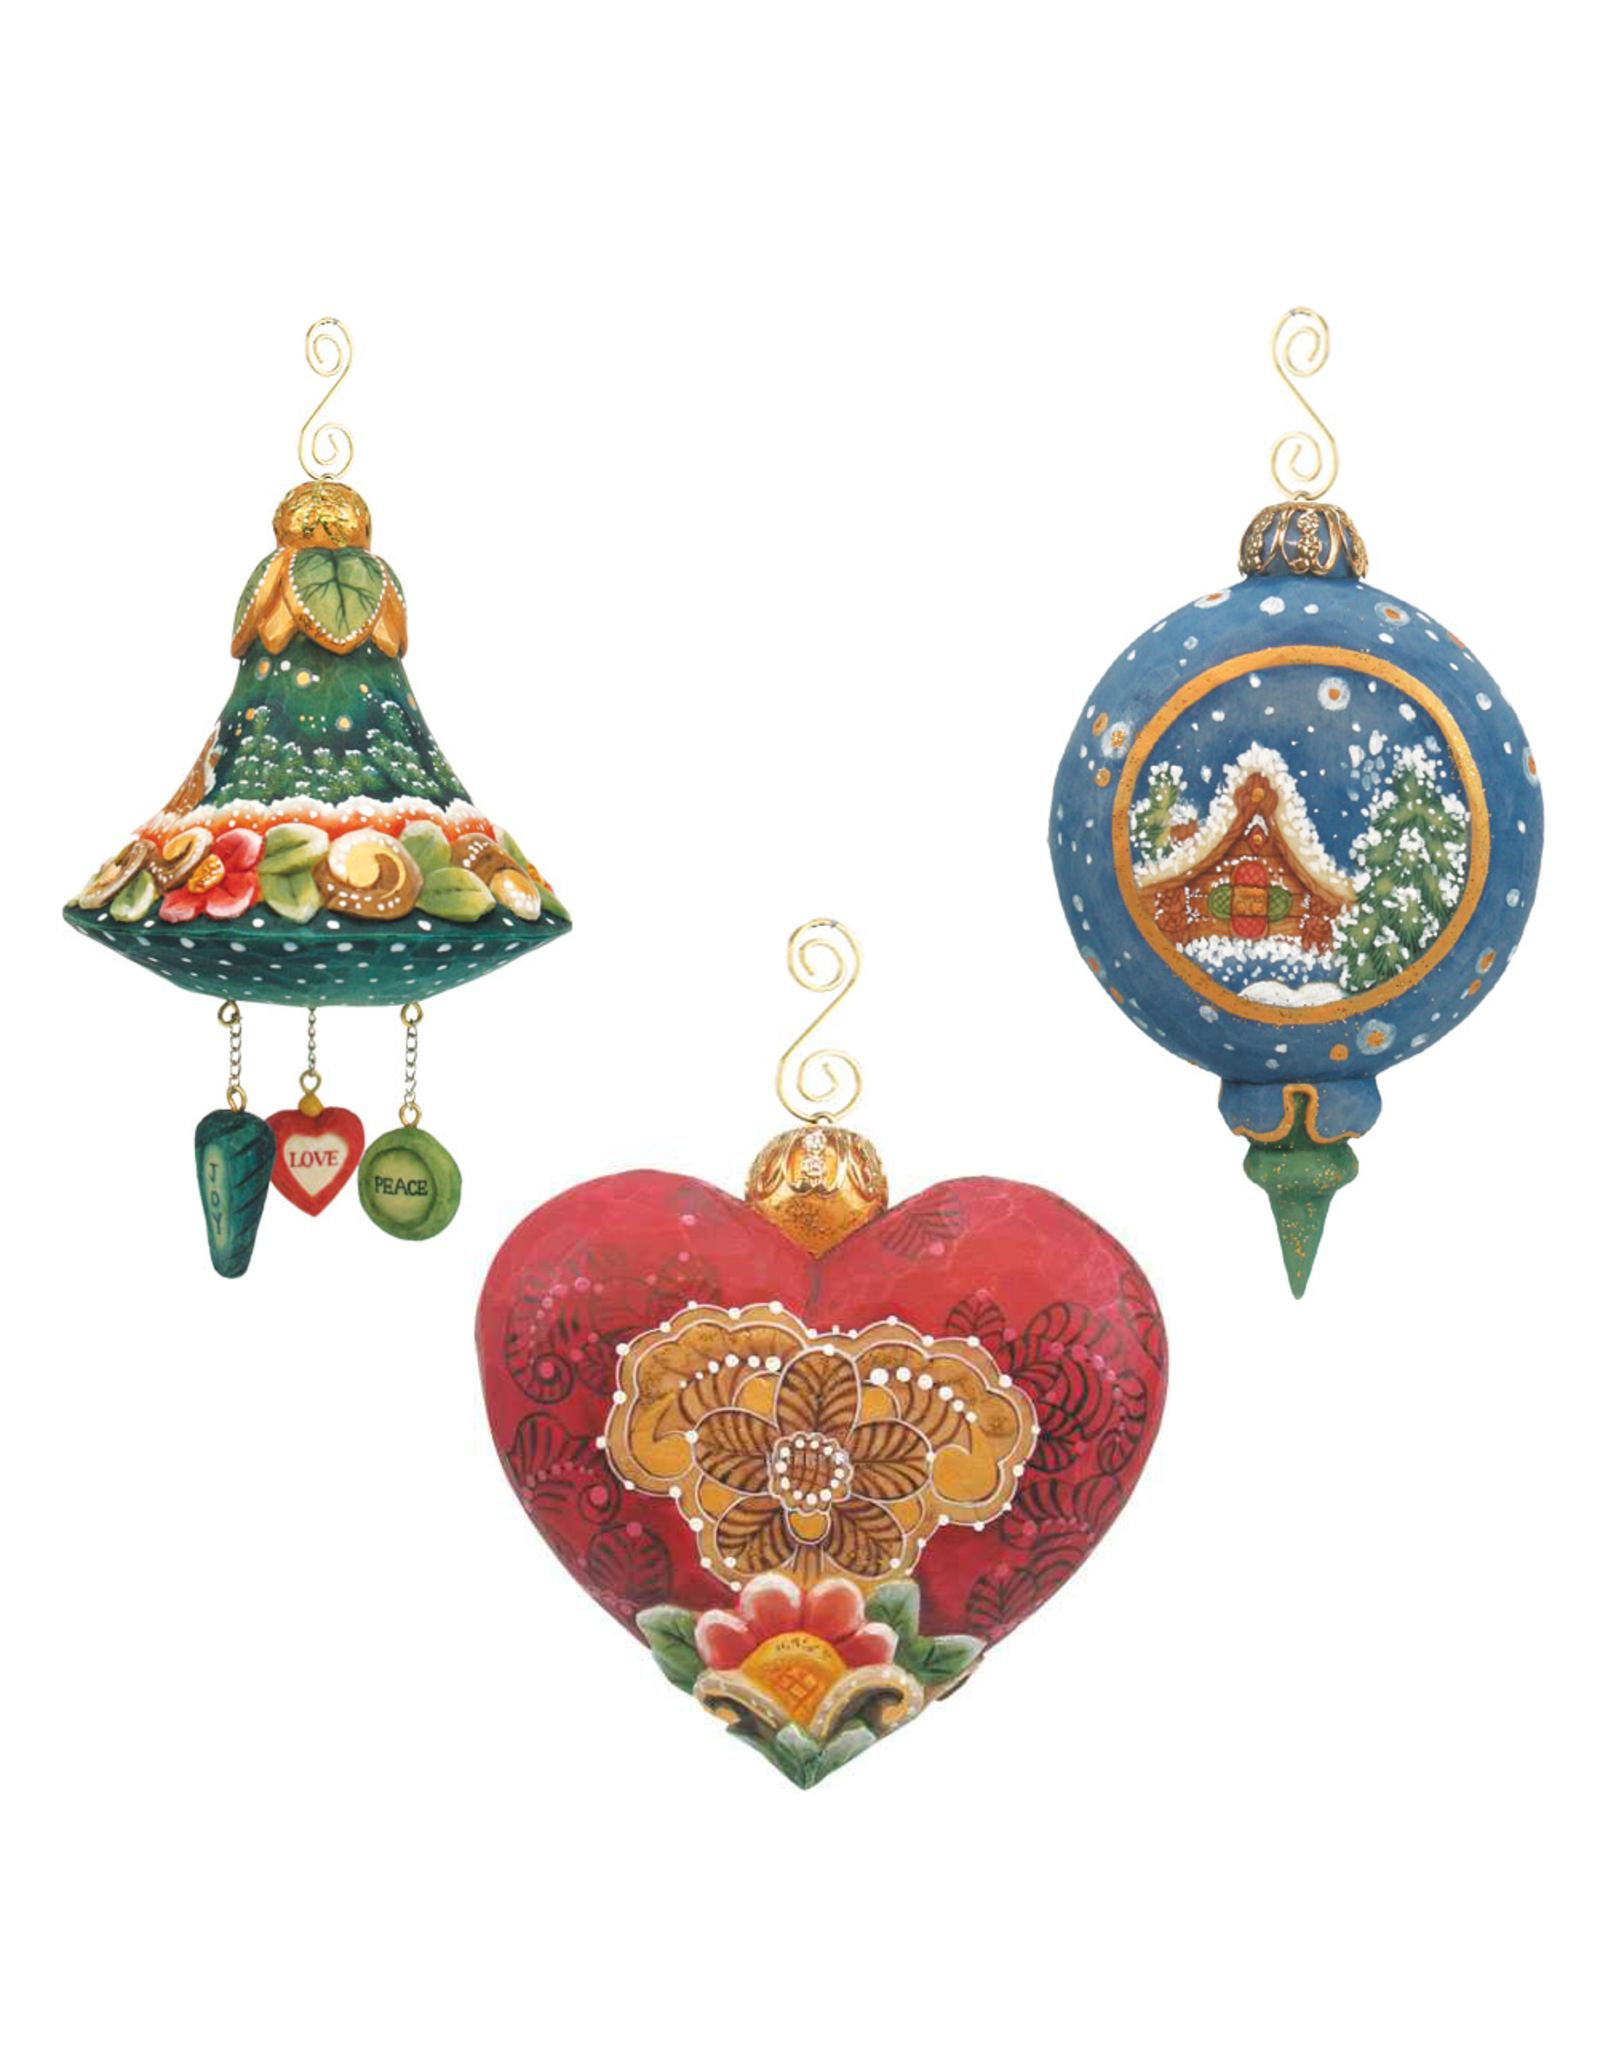 DeBrekht Artistic Studios Bell Heart And Round Drop Ornaments Set Of 3